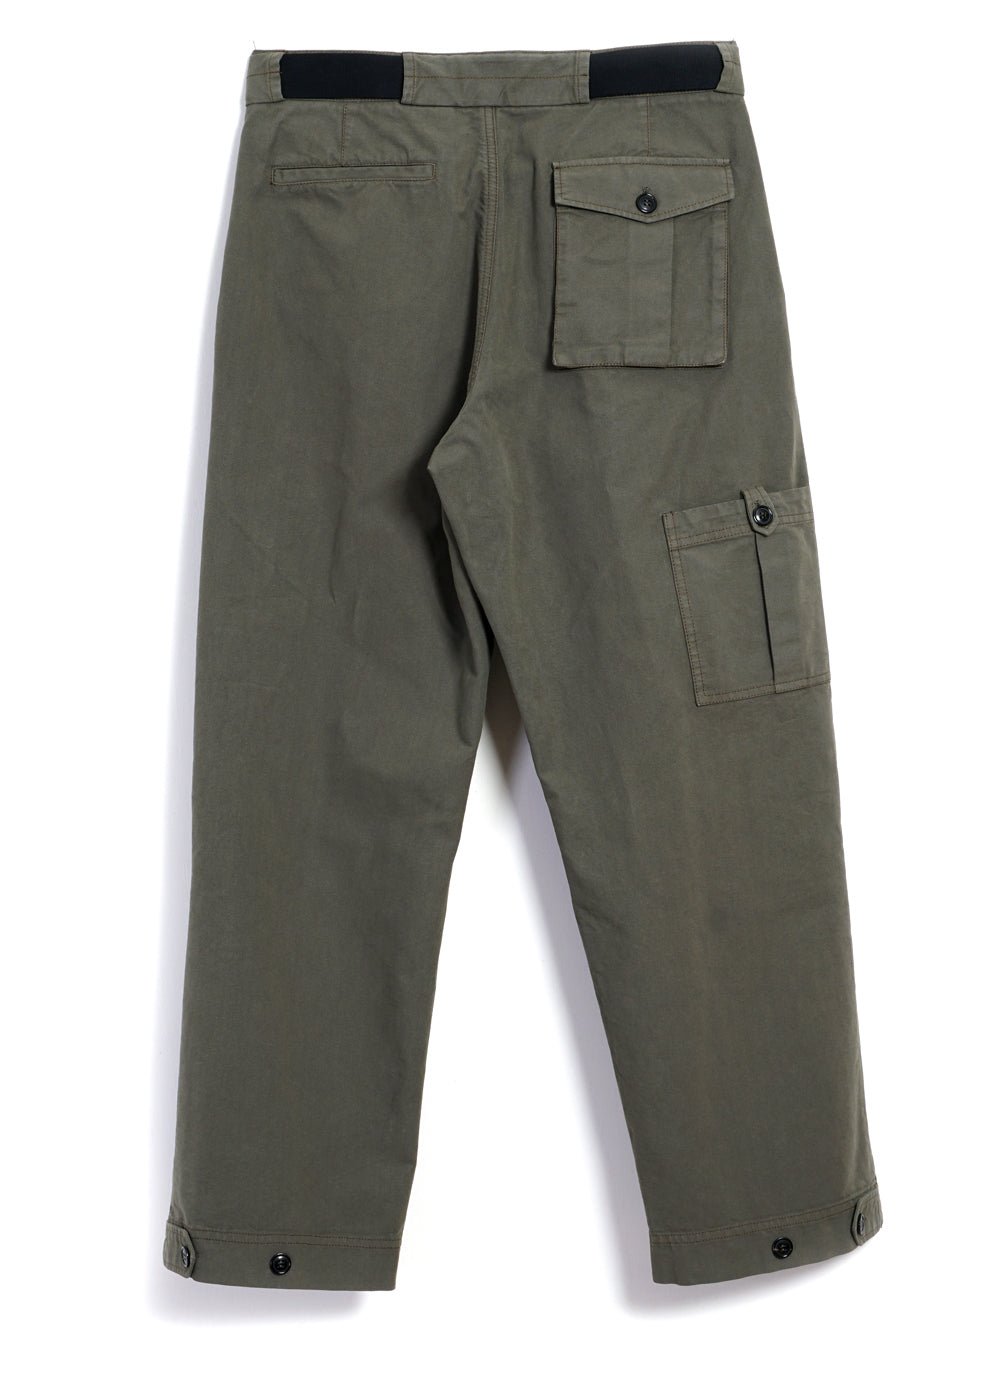 Buy Khaki Green Utility Side Pocket Trousers from Next Poland